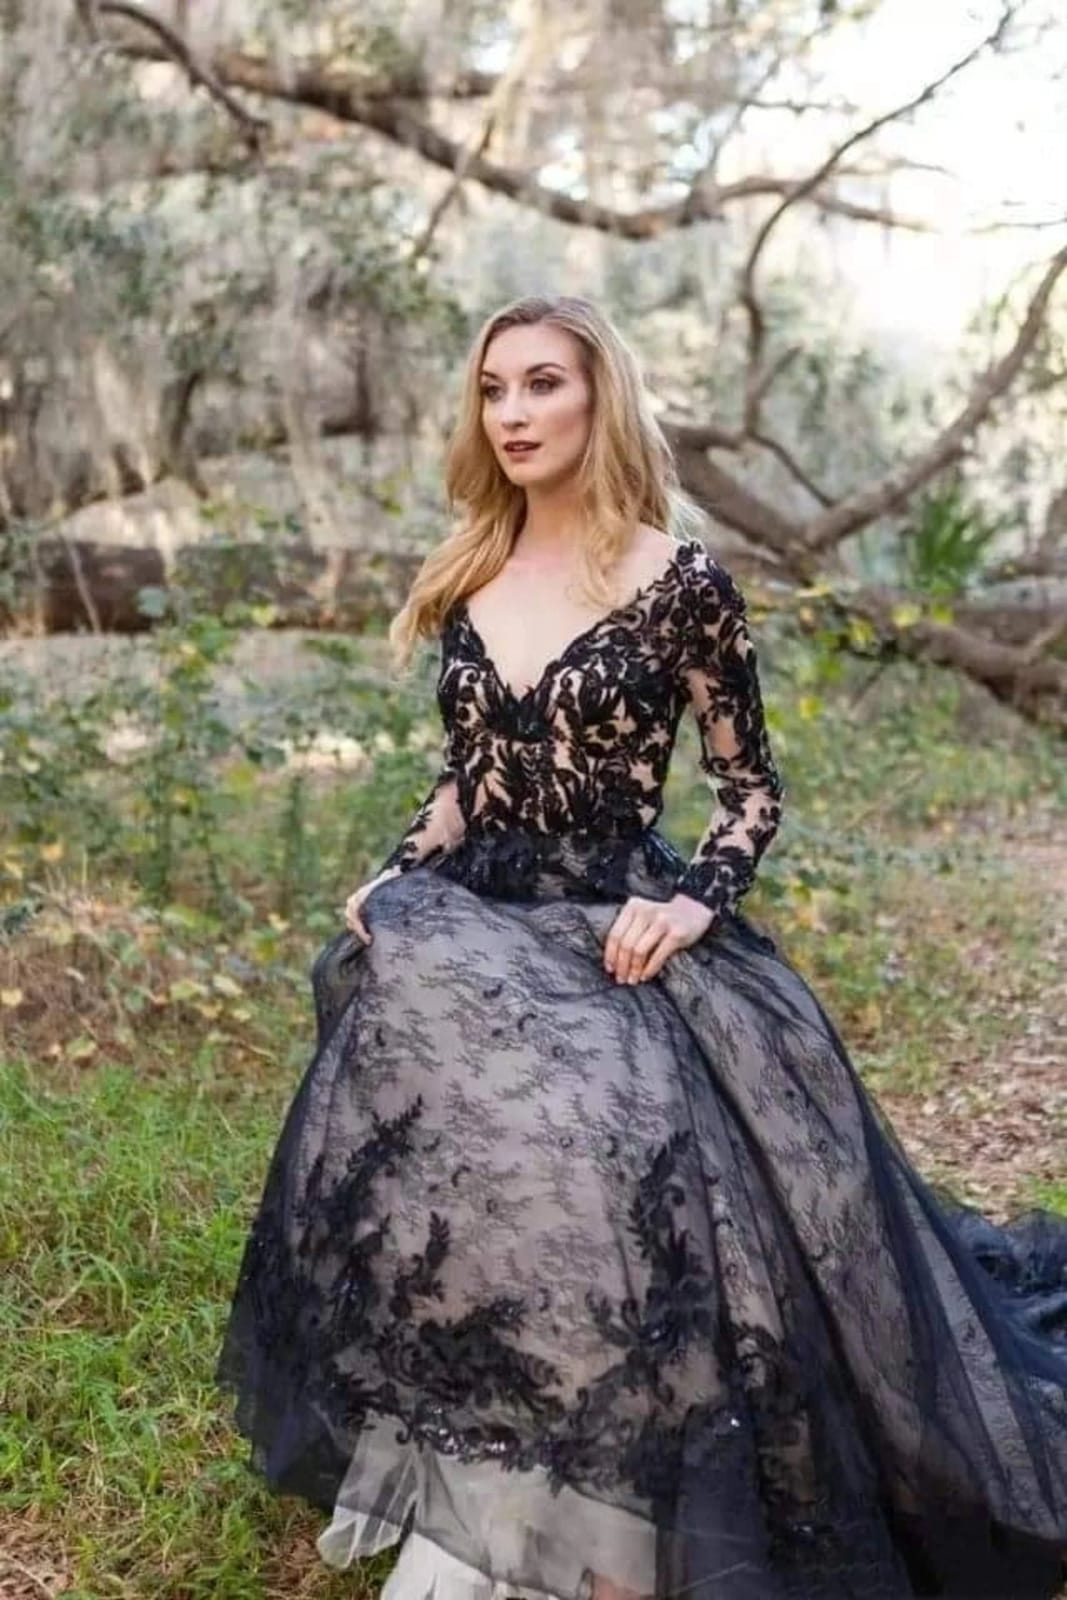 Black Floral A-line Wedding Dress With V-neckline And Spaghetti Straps |  Kleinfeld Bridal